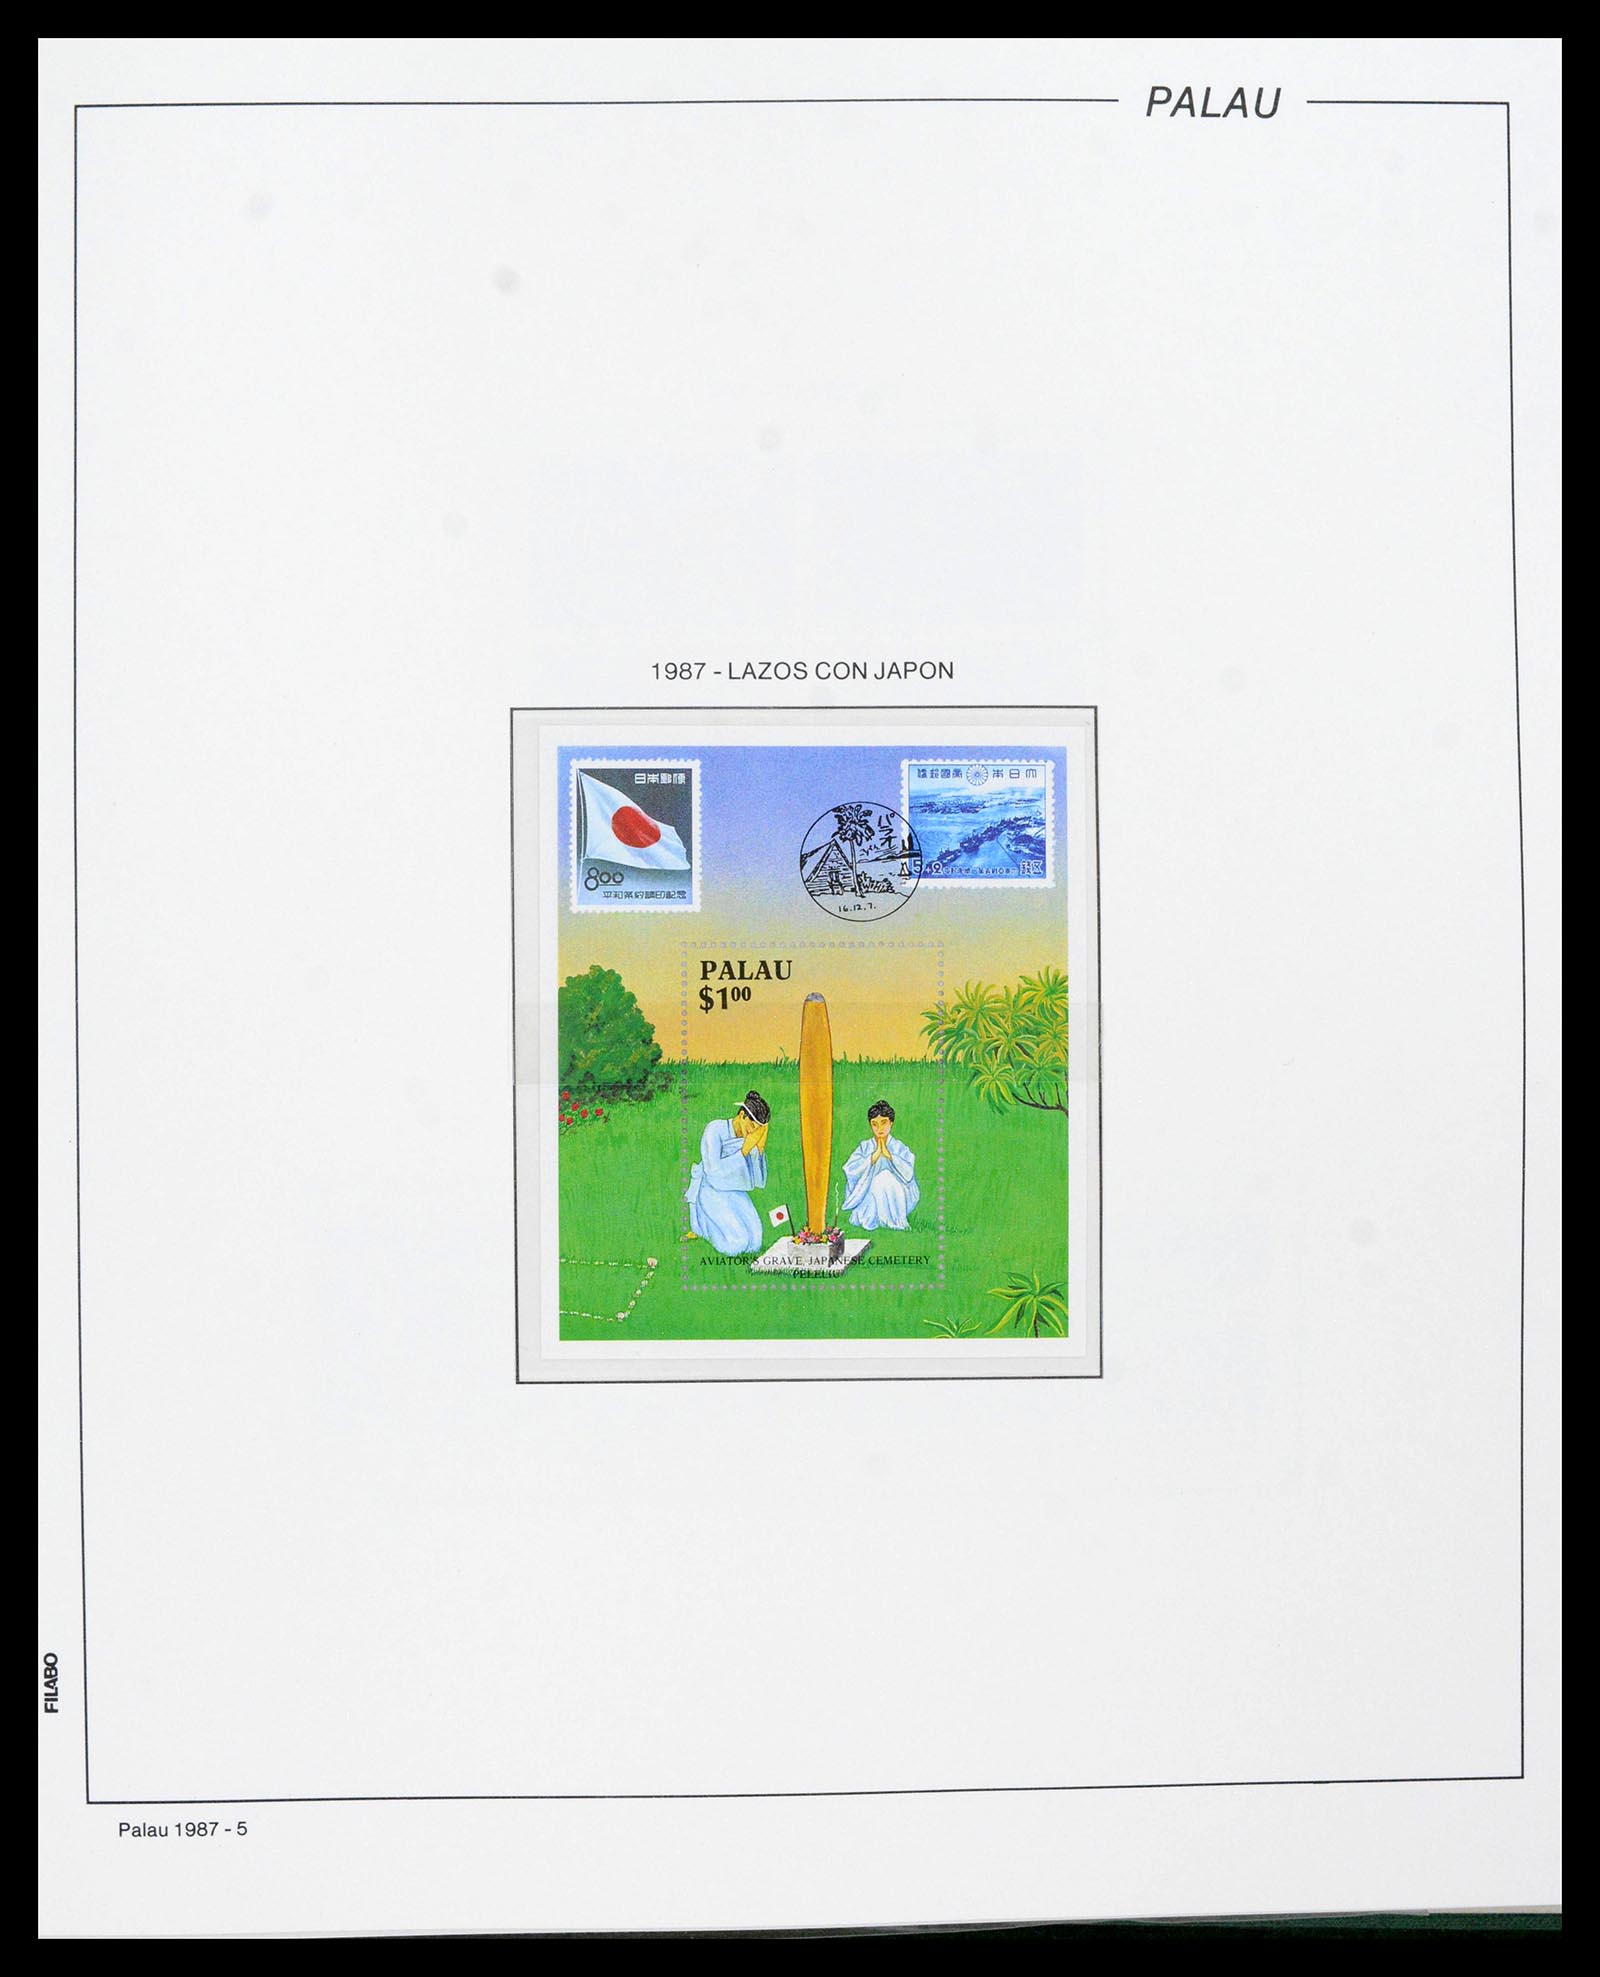 39222 0018 - Stamp collection 39222 Palau, Micronesia and Marshall islands 1980-1995.